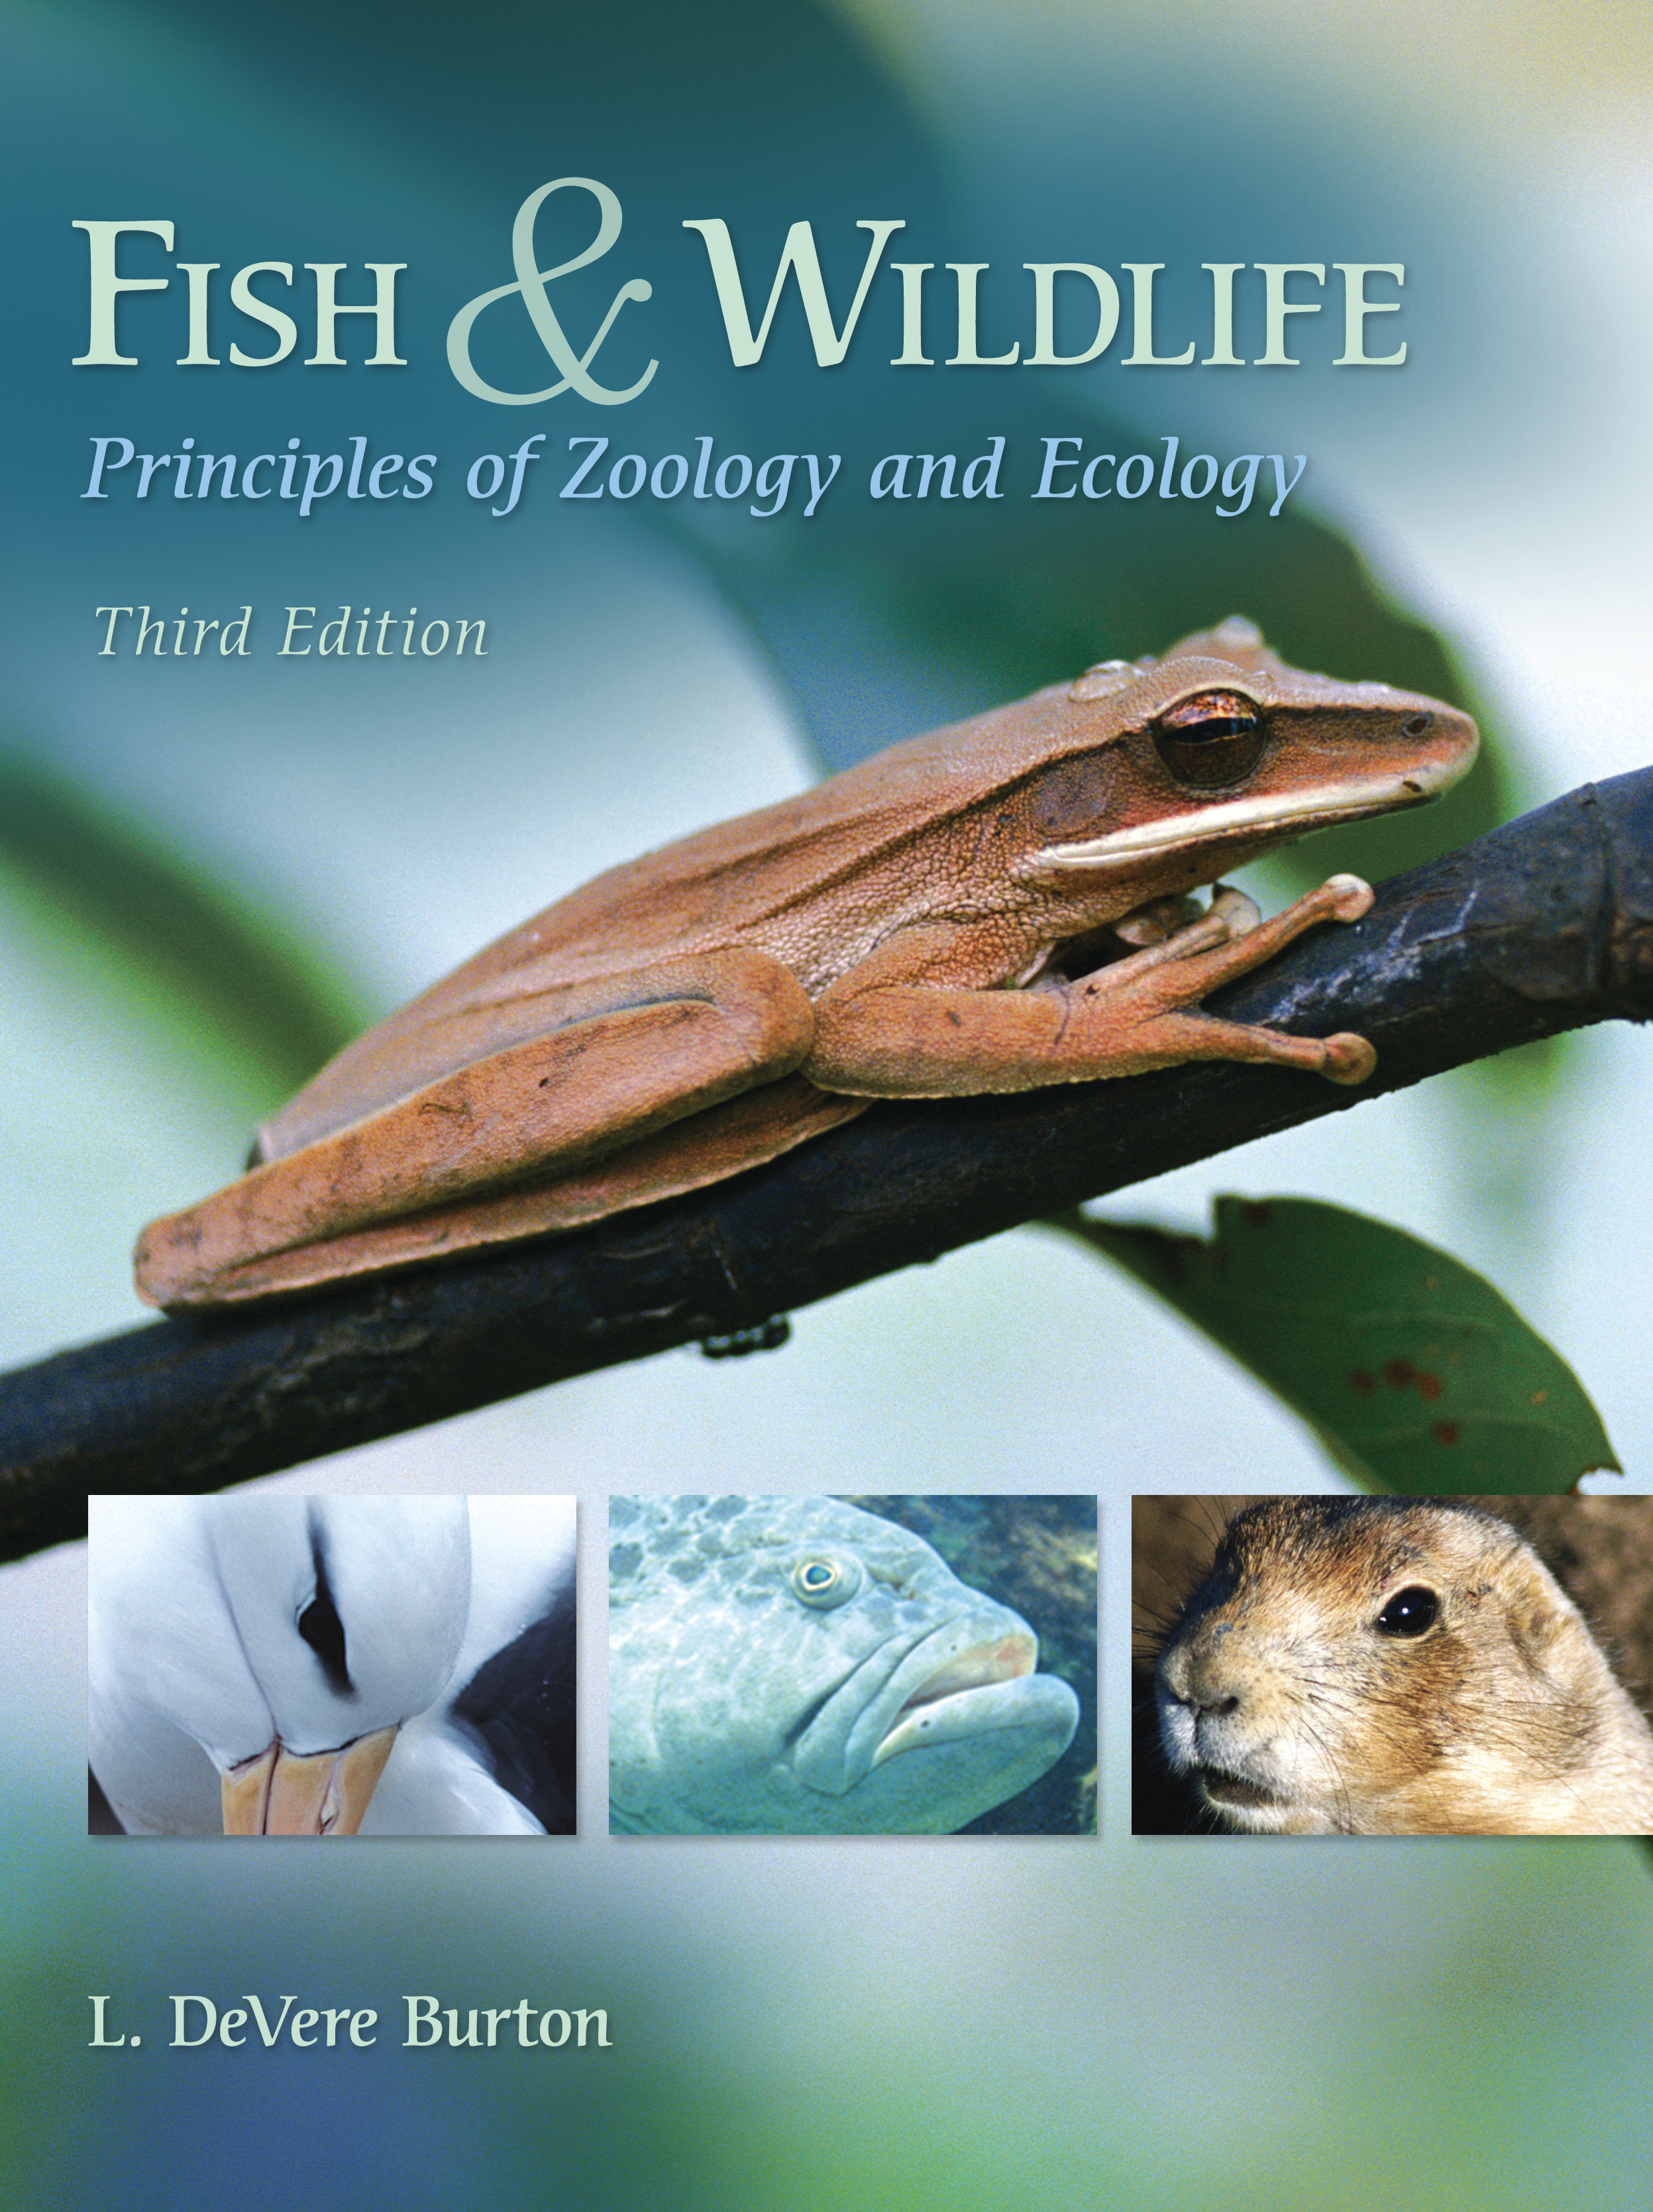 Fish & Wildlife: Principles of Zoology and Ecology